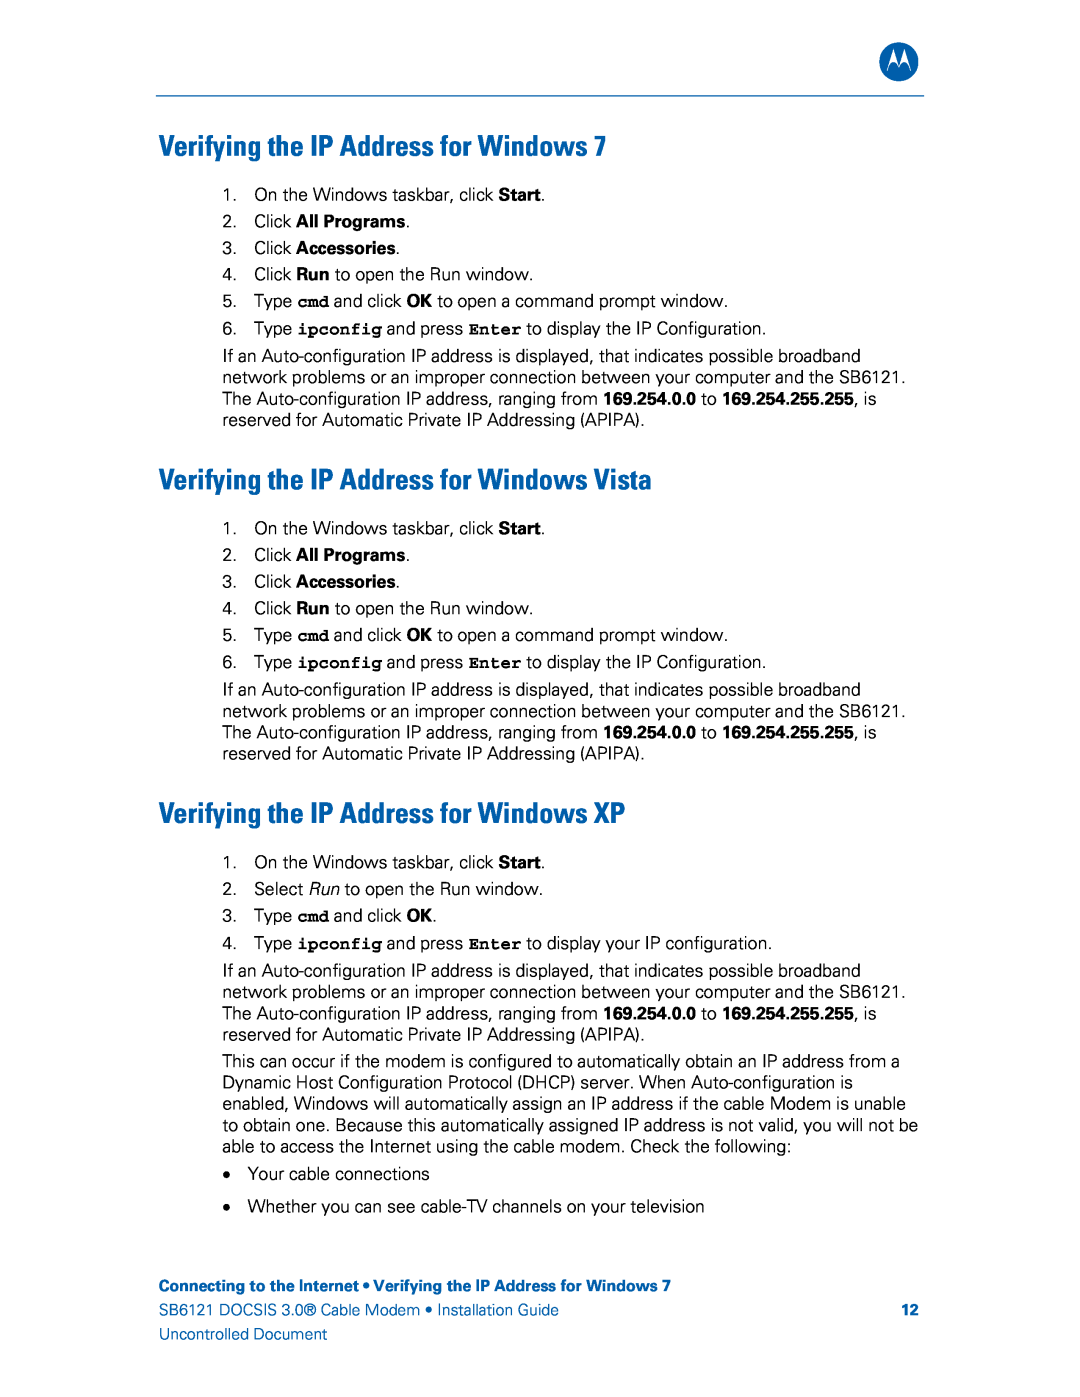 Motorola SB6121, 575319-019-00 Verifying the IP Address for Windows Vista, Verifying the IP Address for Windows XP 